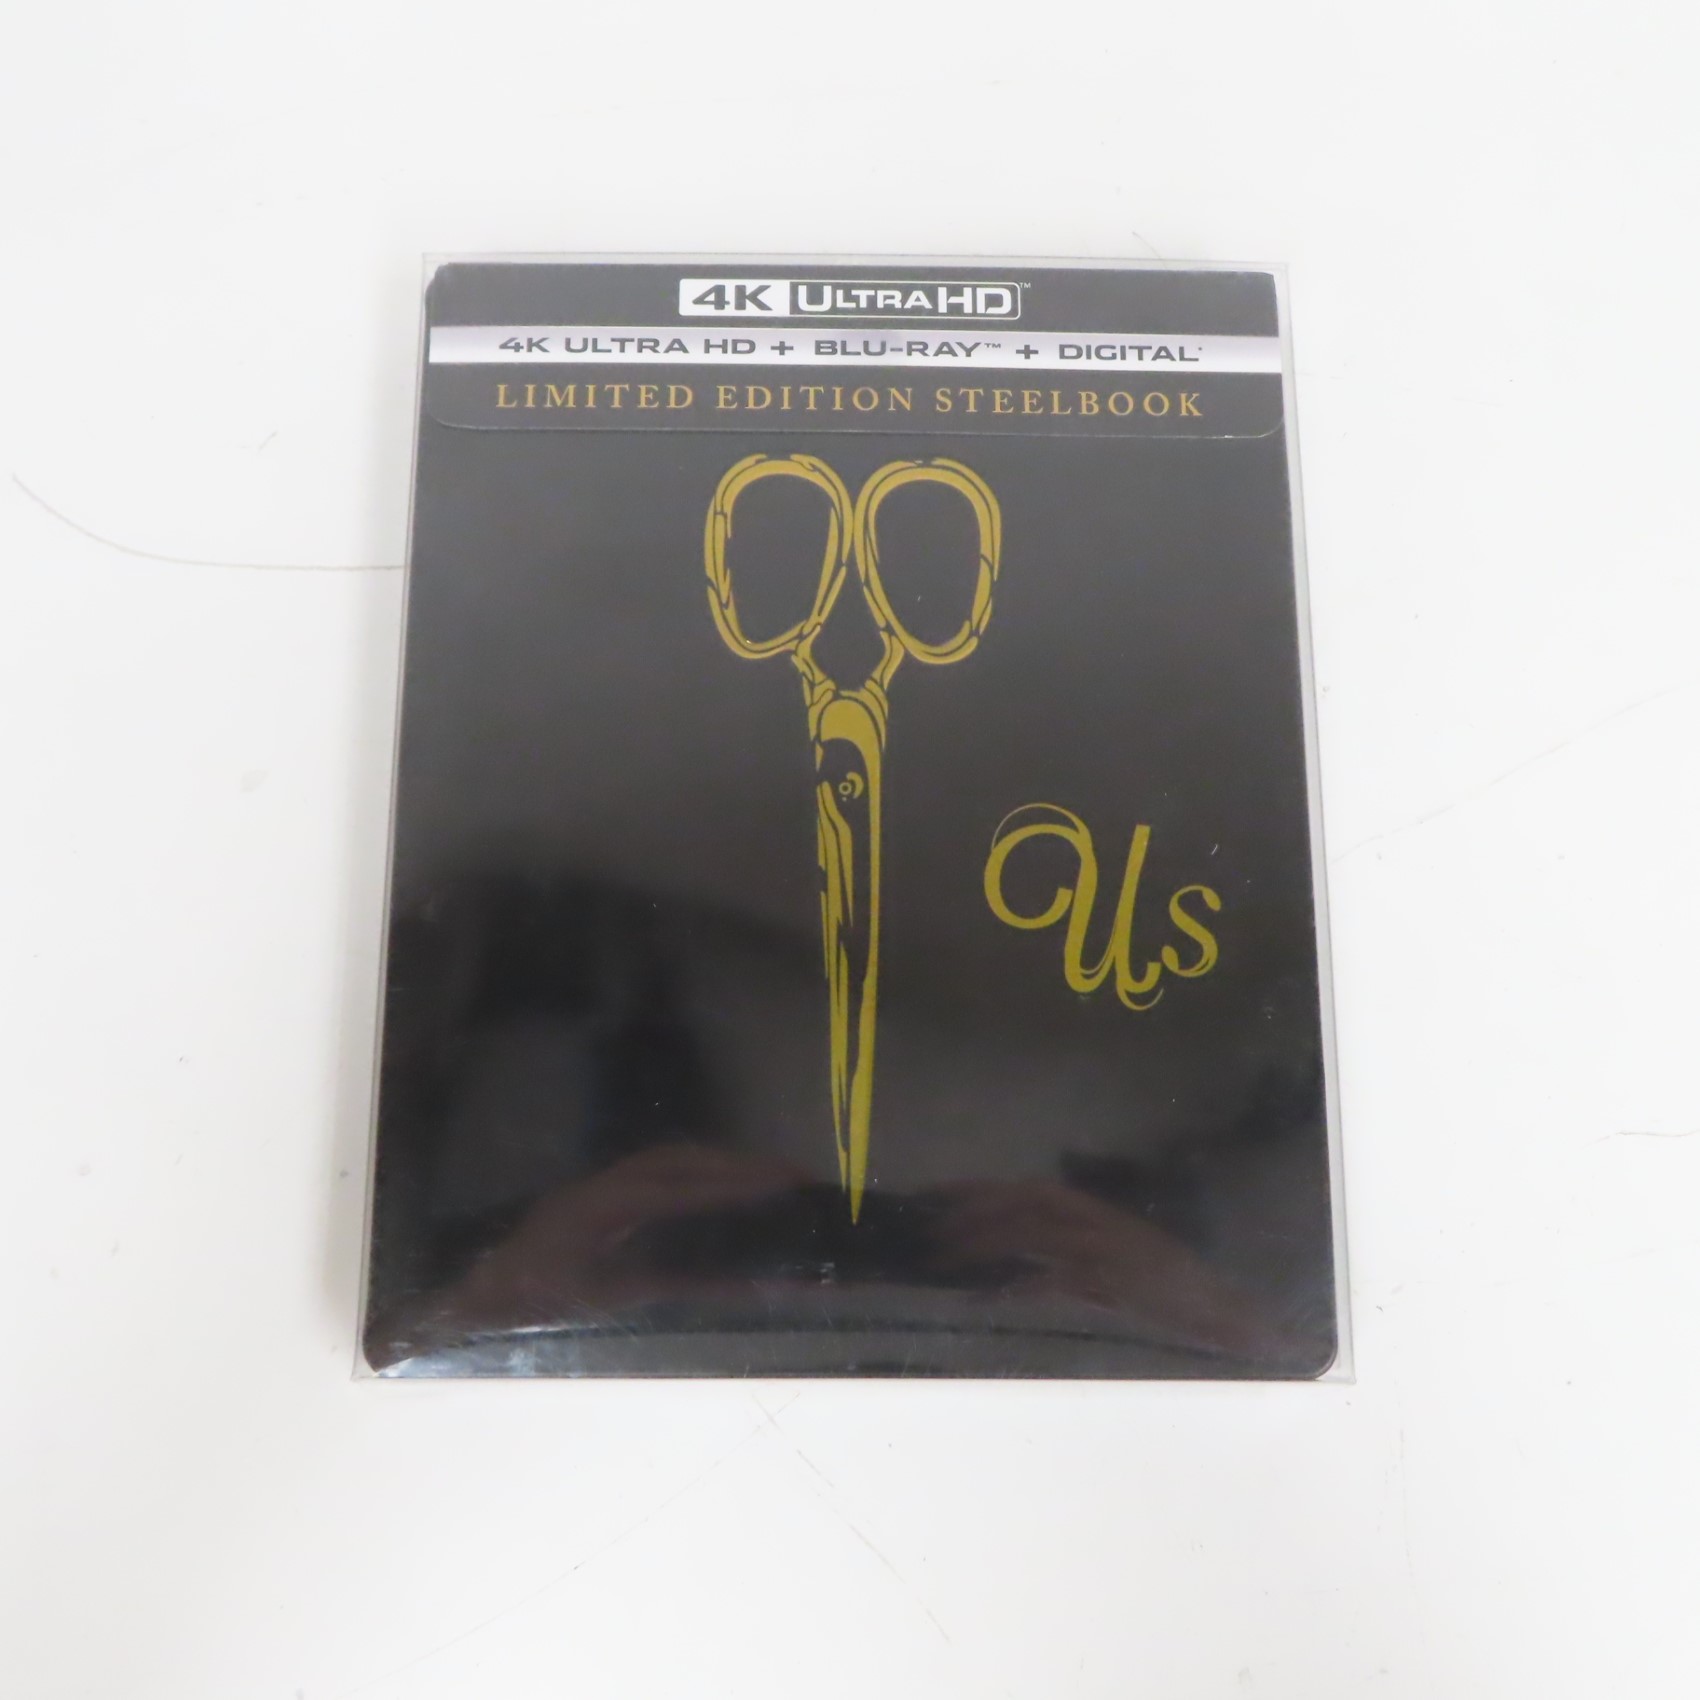  Uncharted (Limited Edition Steelbook) [4K UHD + Blu